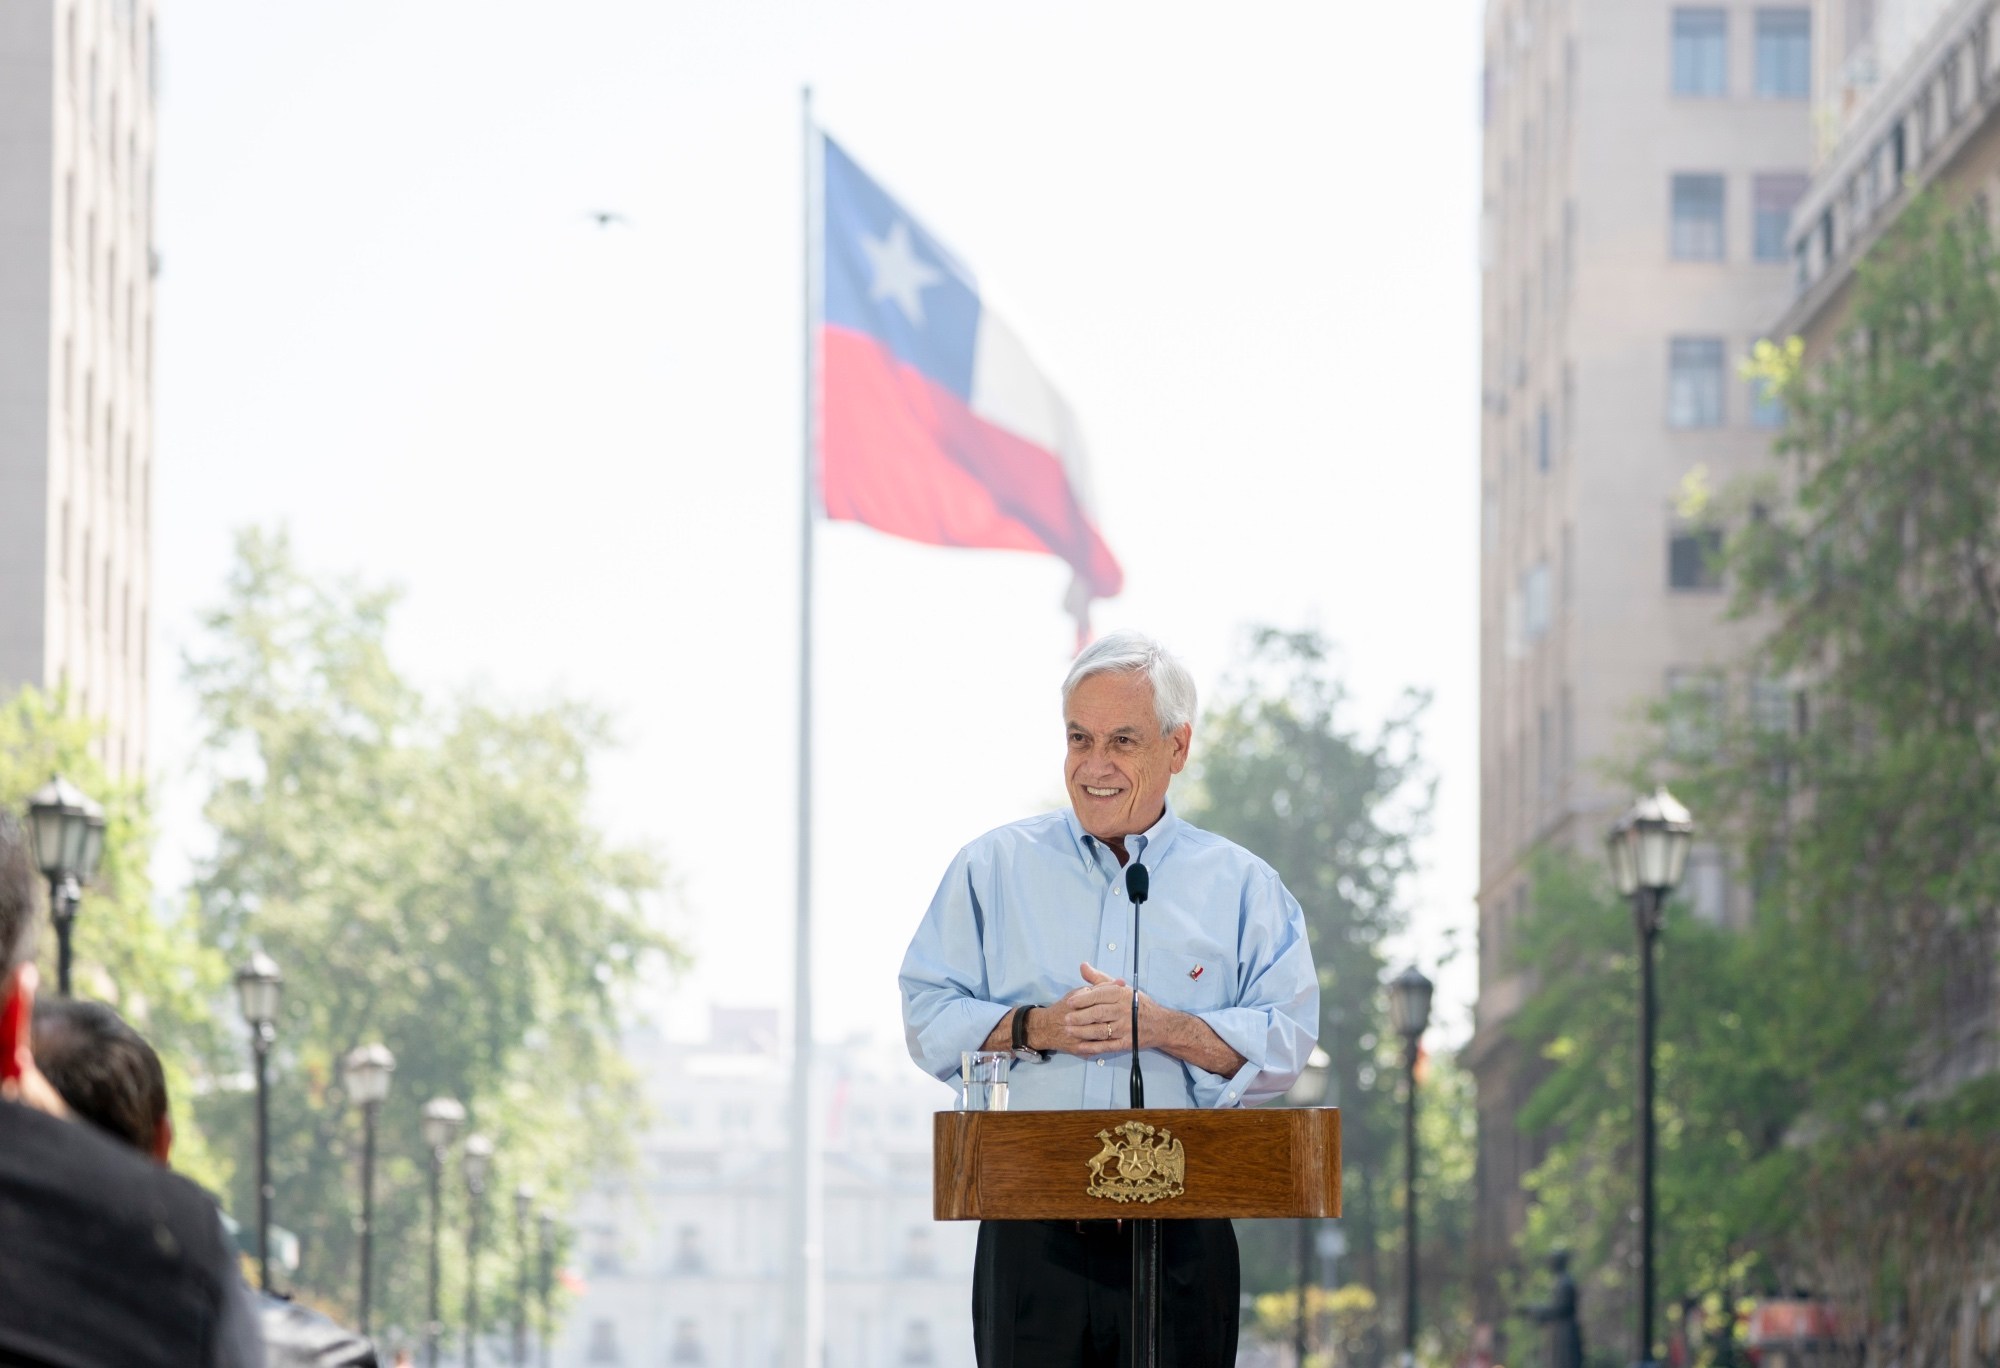 Presidente Piñera confirmó que Chile no firmará Acuerdo de Escazú: “No agrega nada”